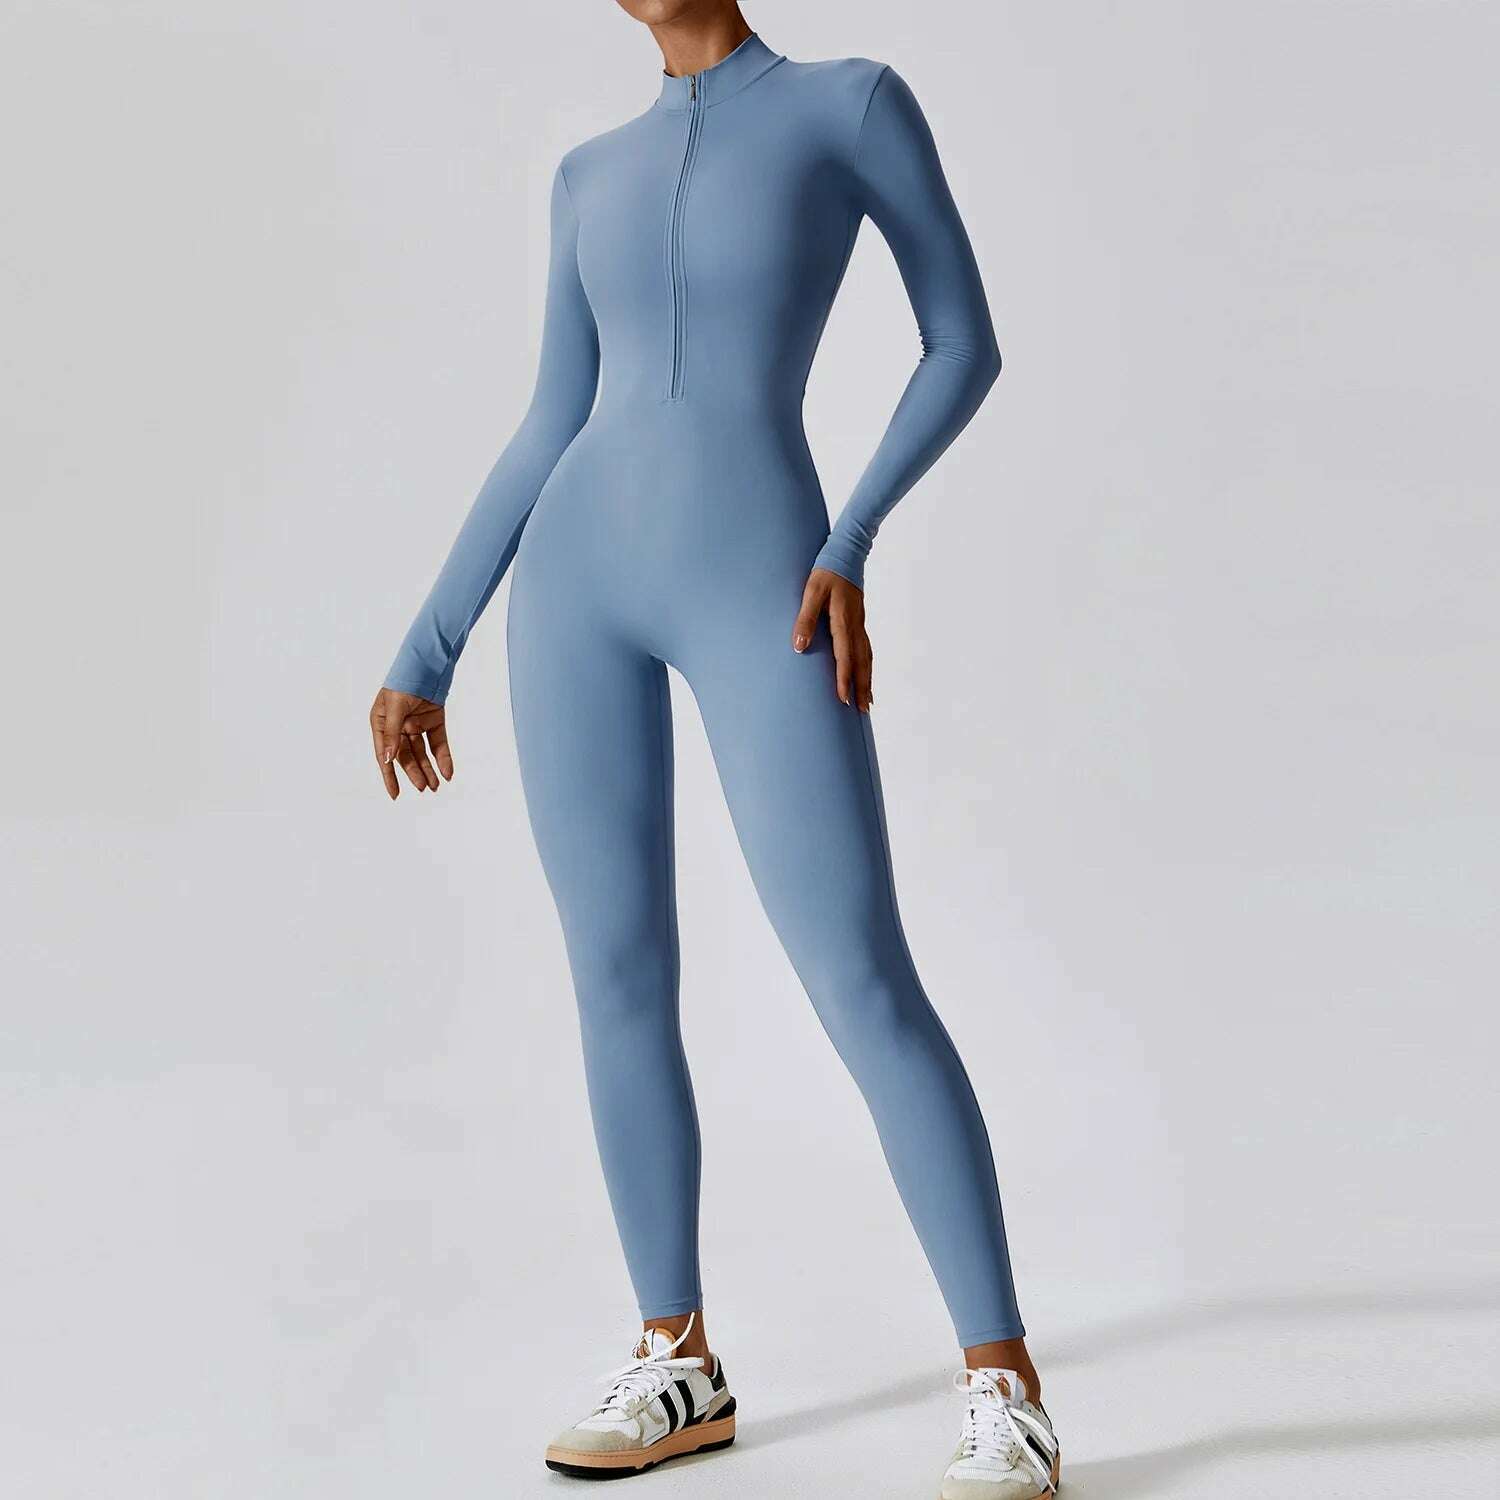 KIMLUD, Yoga Boilersuit Long Sleeved Women's Sportswear Gym Zipper Jumpsuits Workout High-intensity Fitness One-piece Skin-tight Garment, Haze Blue / S / CHINA, KIMLUD Women's Clothes